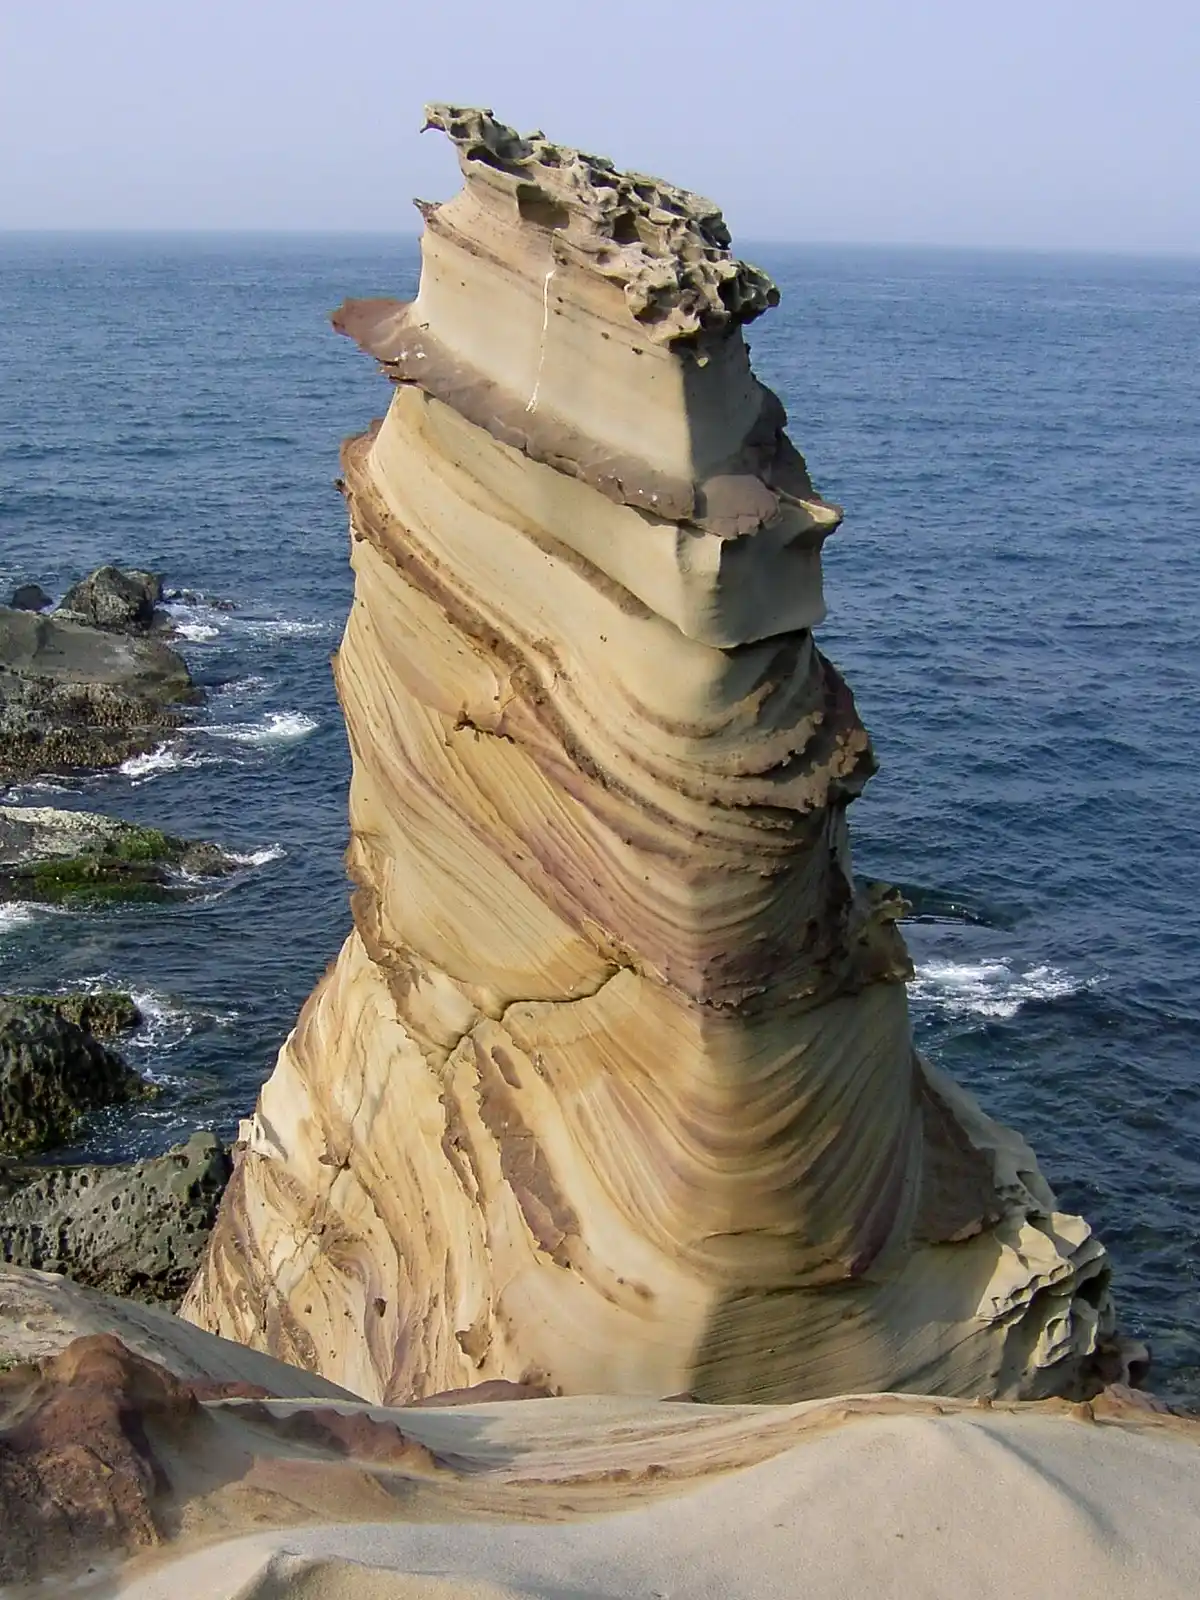 A photo an eroded sandstone rock: "Nanya Rock" against the ocean.